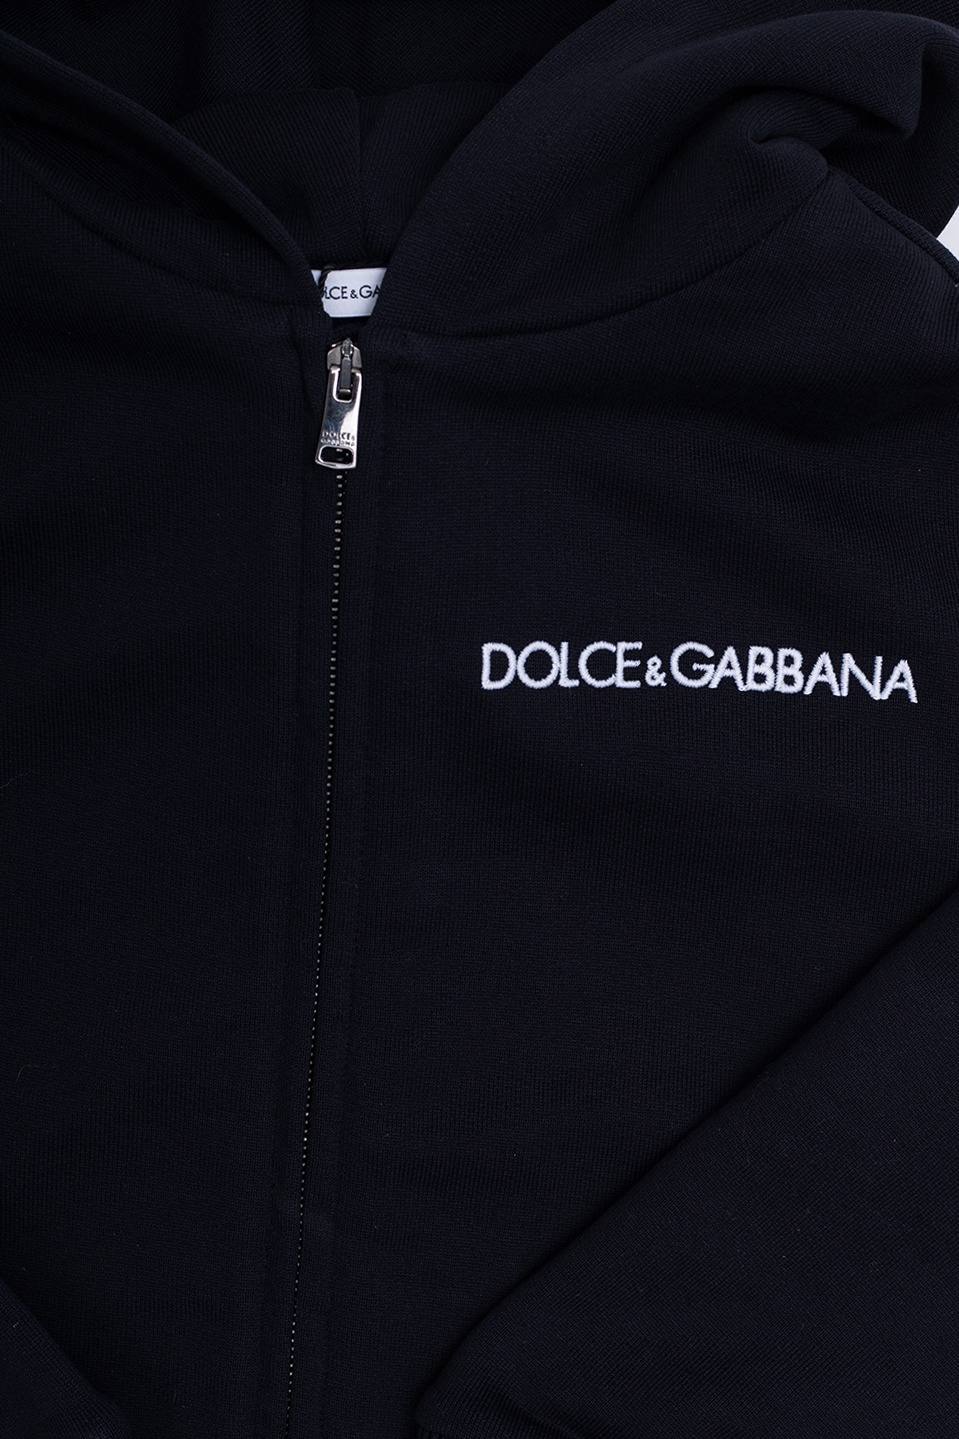 dolce and gabbana black flower slide sandals Logo hoodie